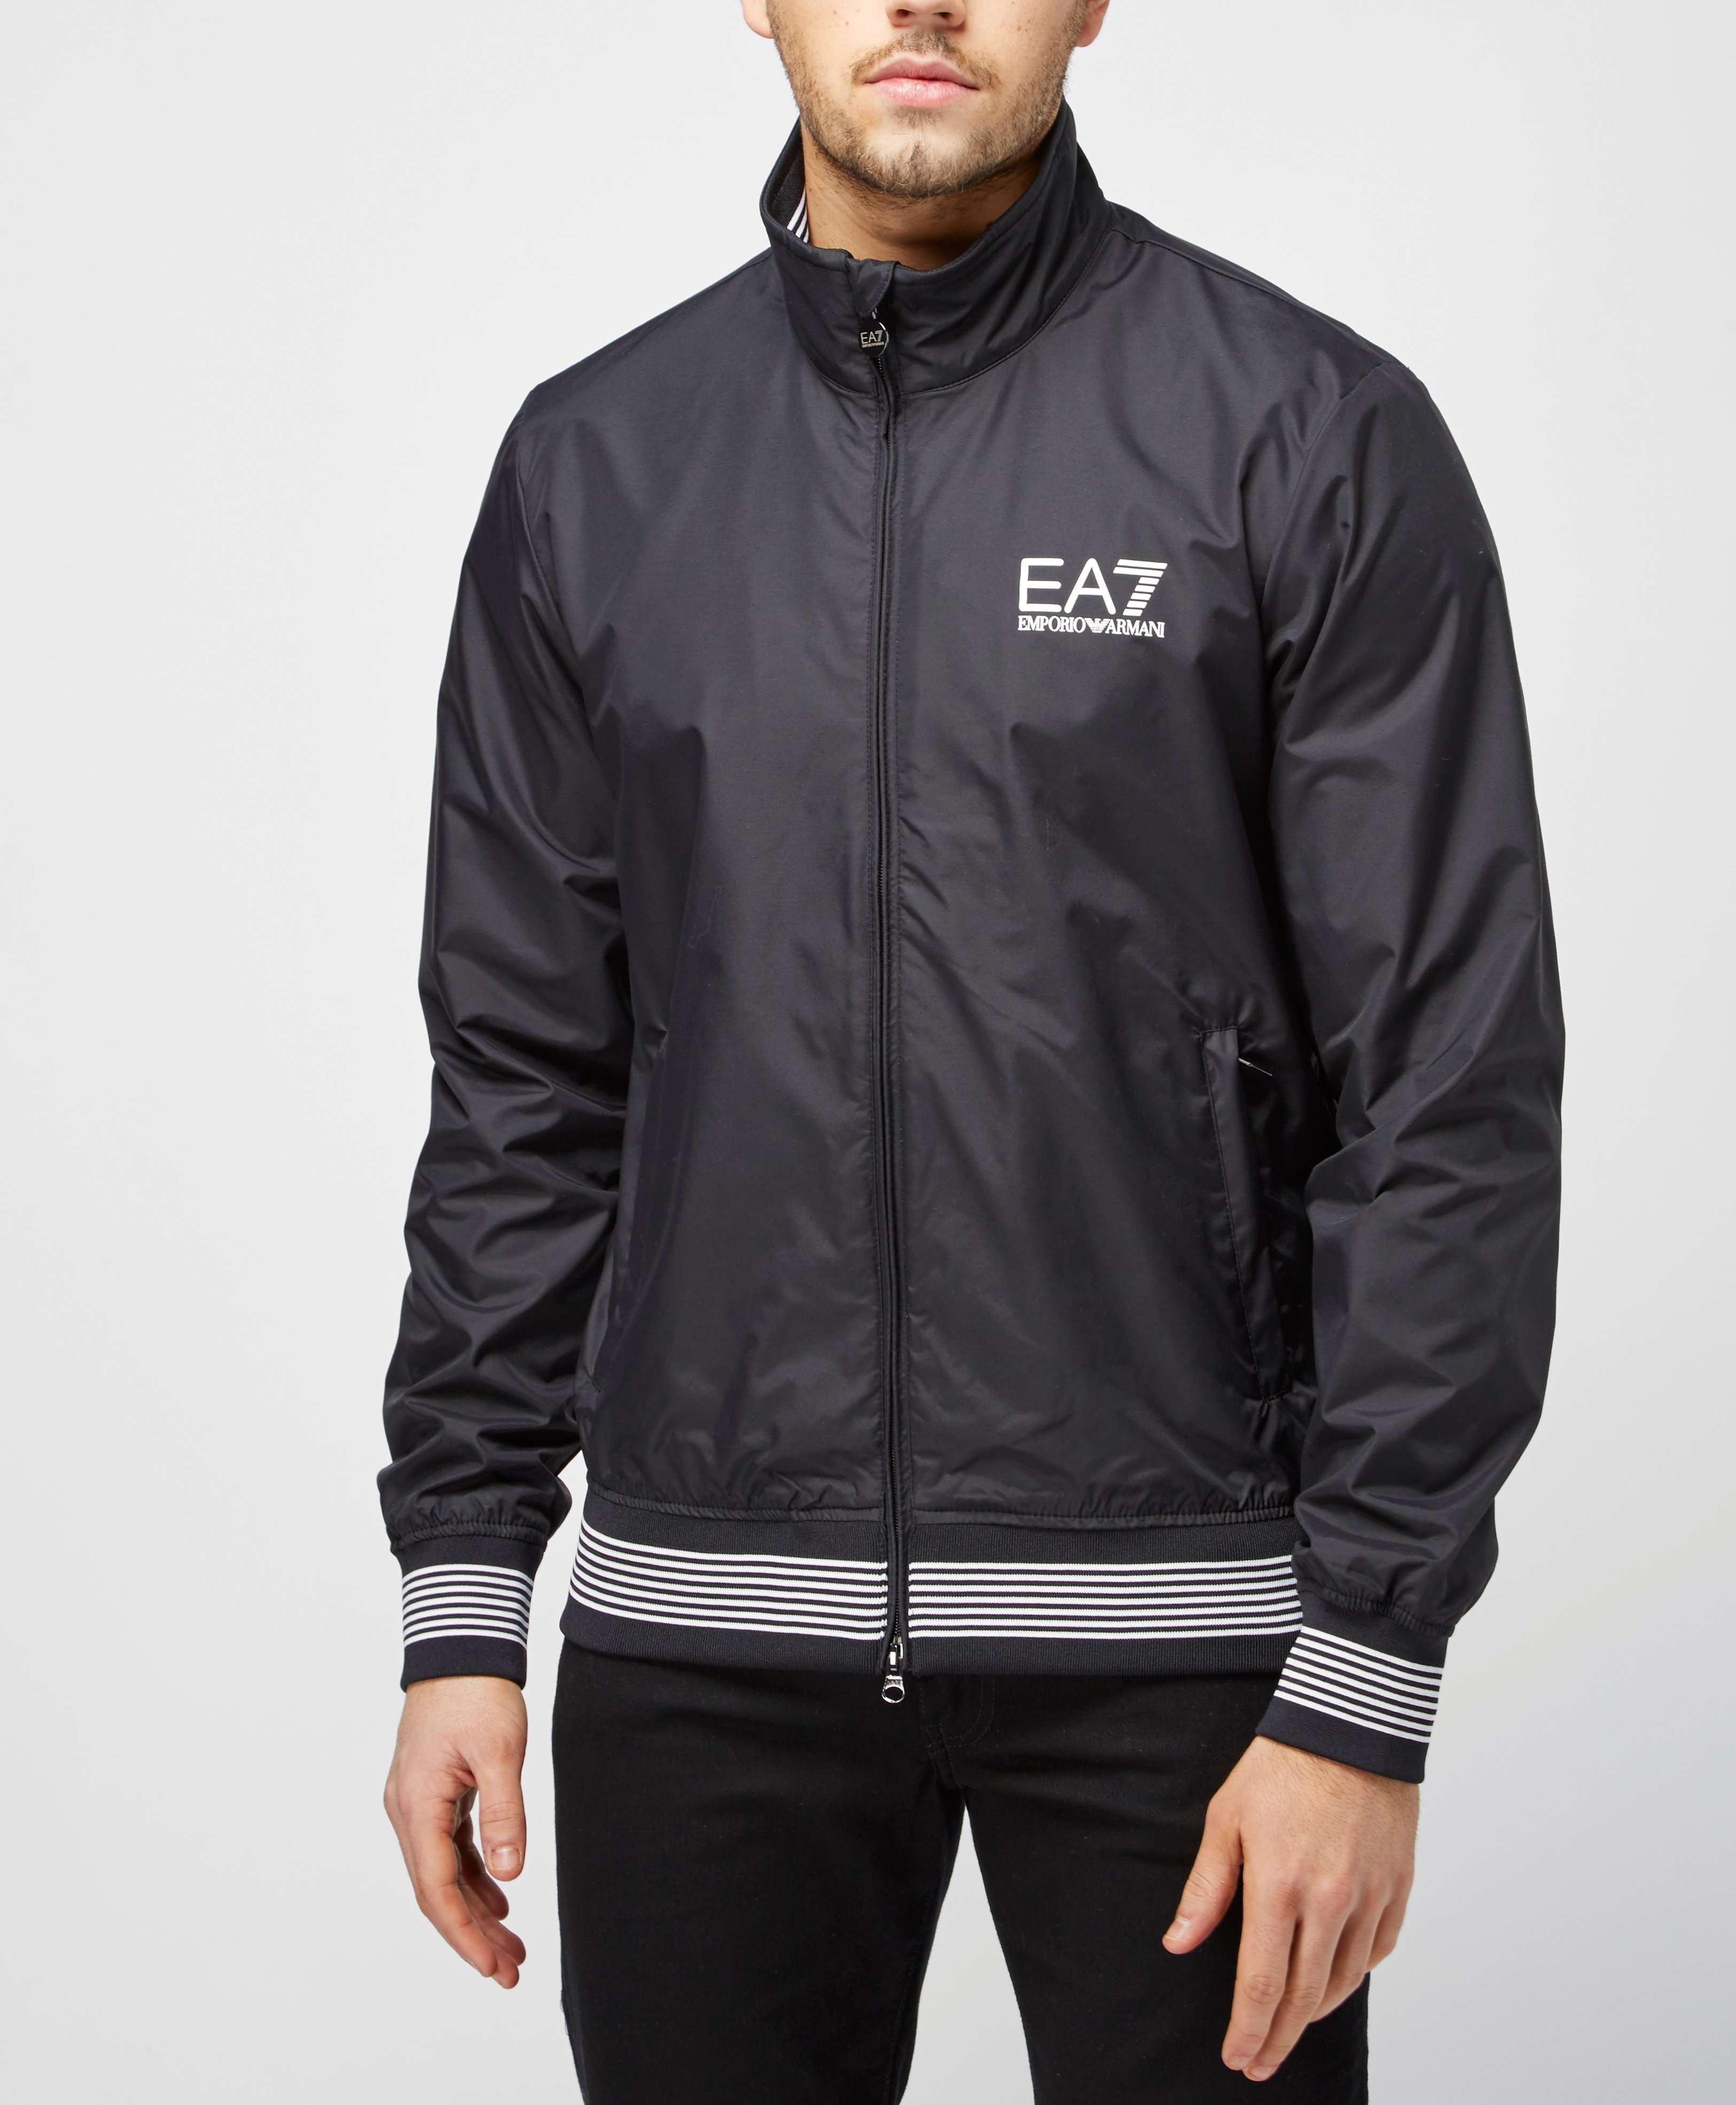 Emporio Armani EA7 Sailing Jacket | scotts Menswear